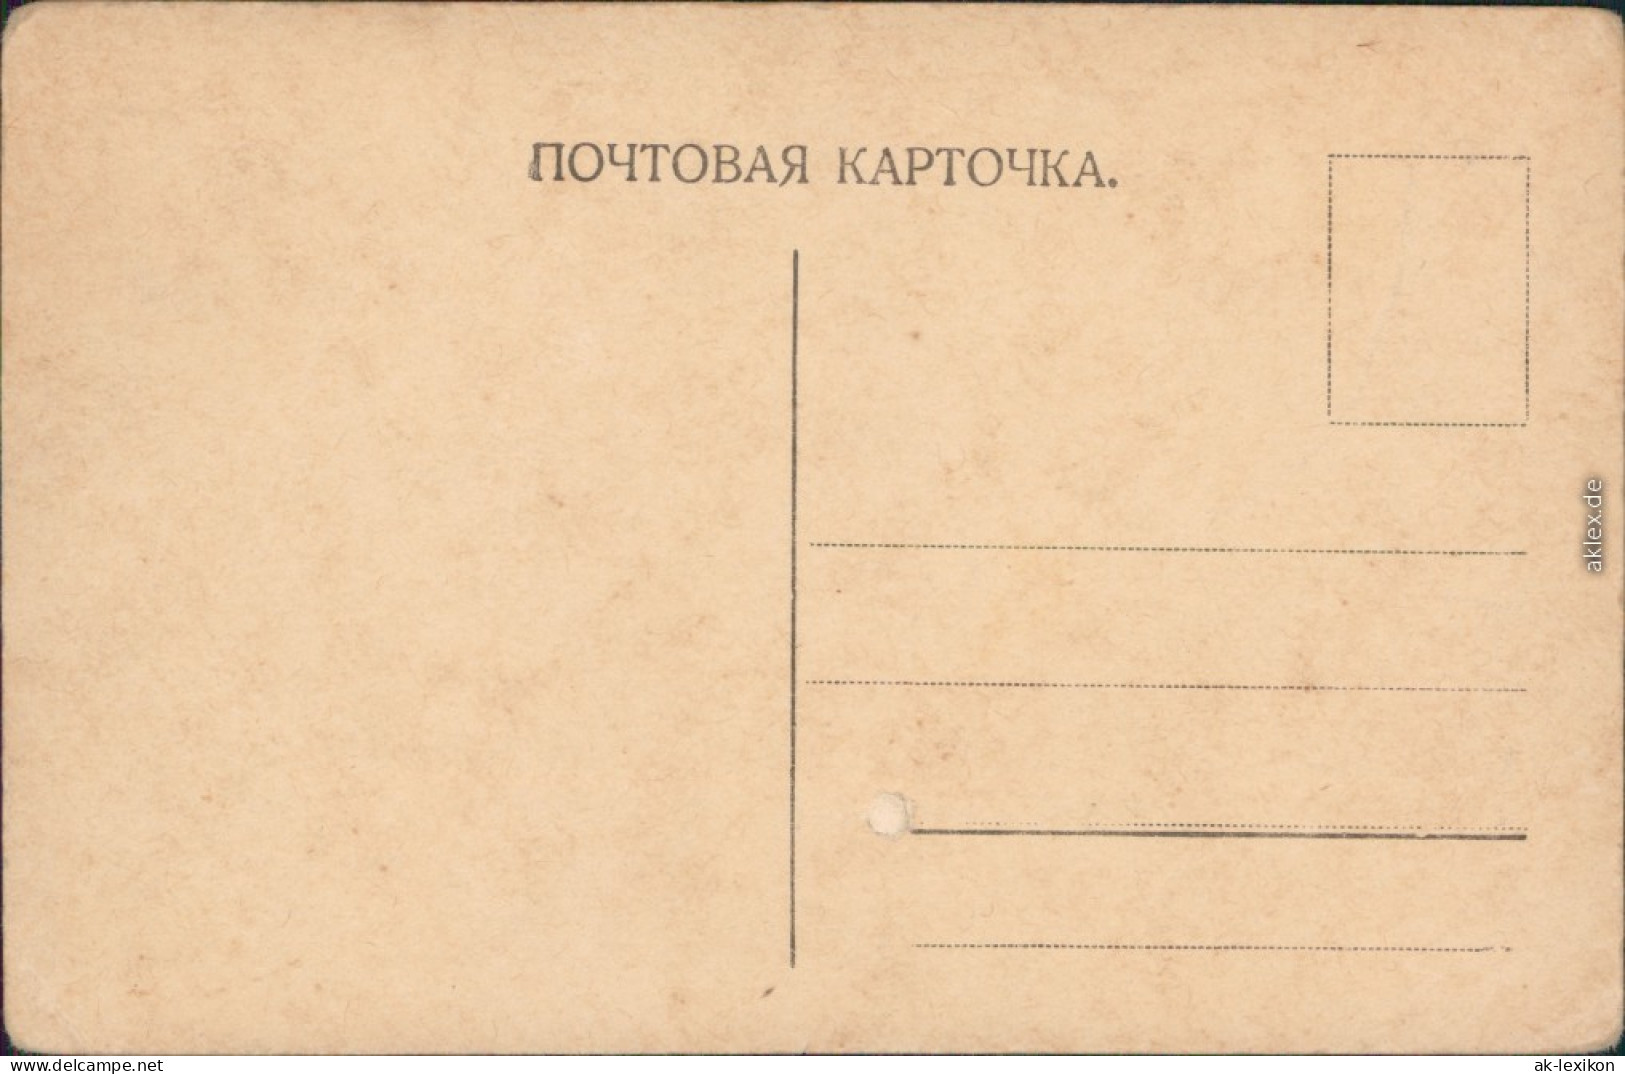 Moskau Москва́ Vue De Temple Du Sauveur Ansichtskarte Postcard 1914 - Russia